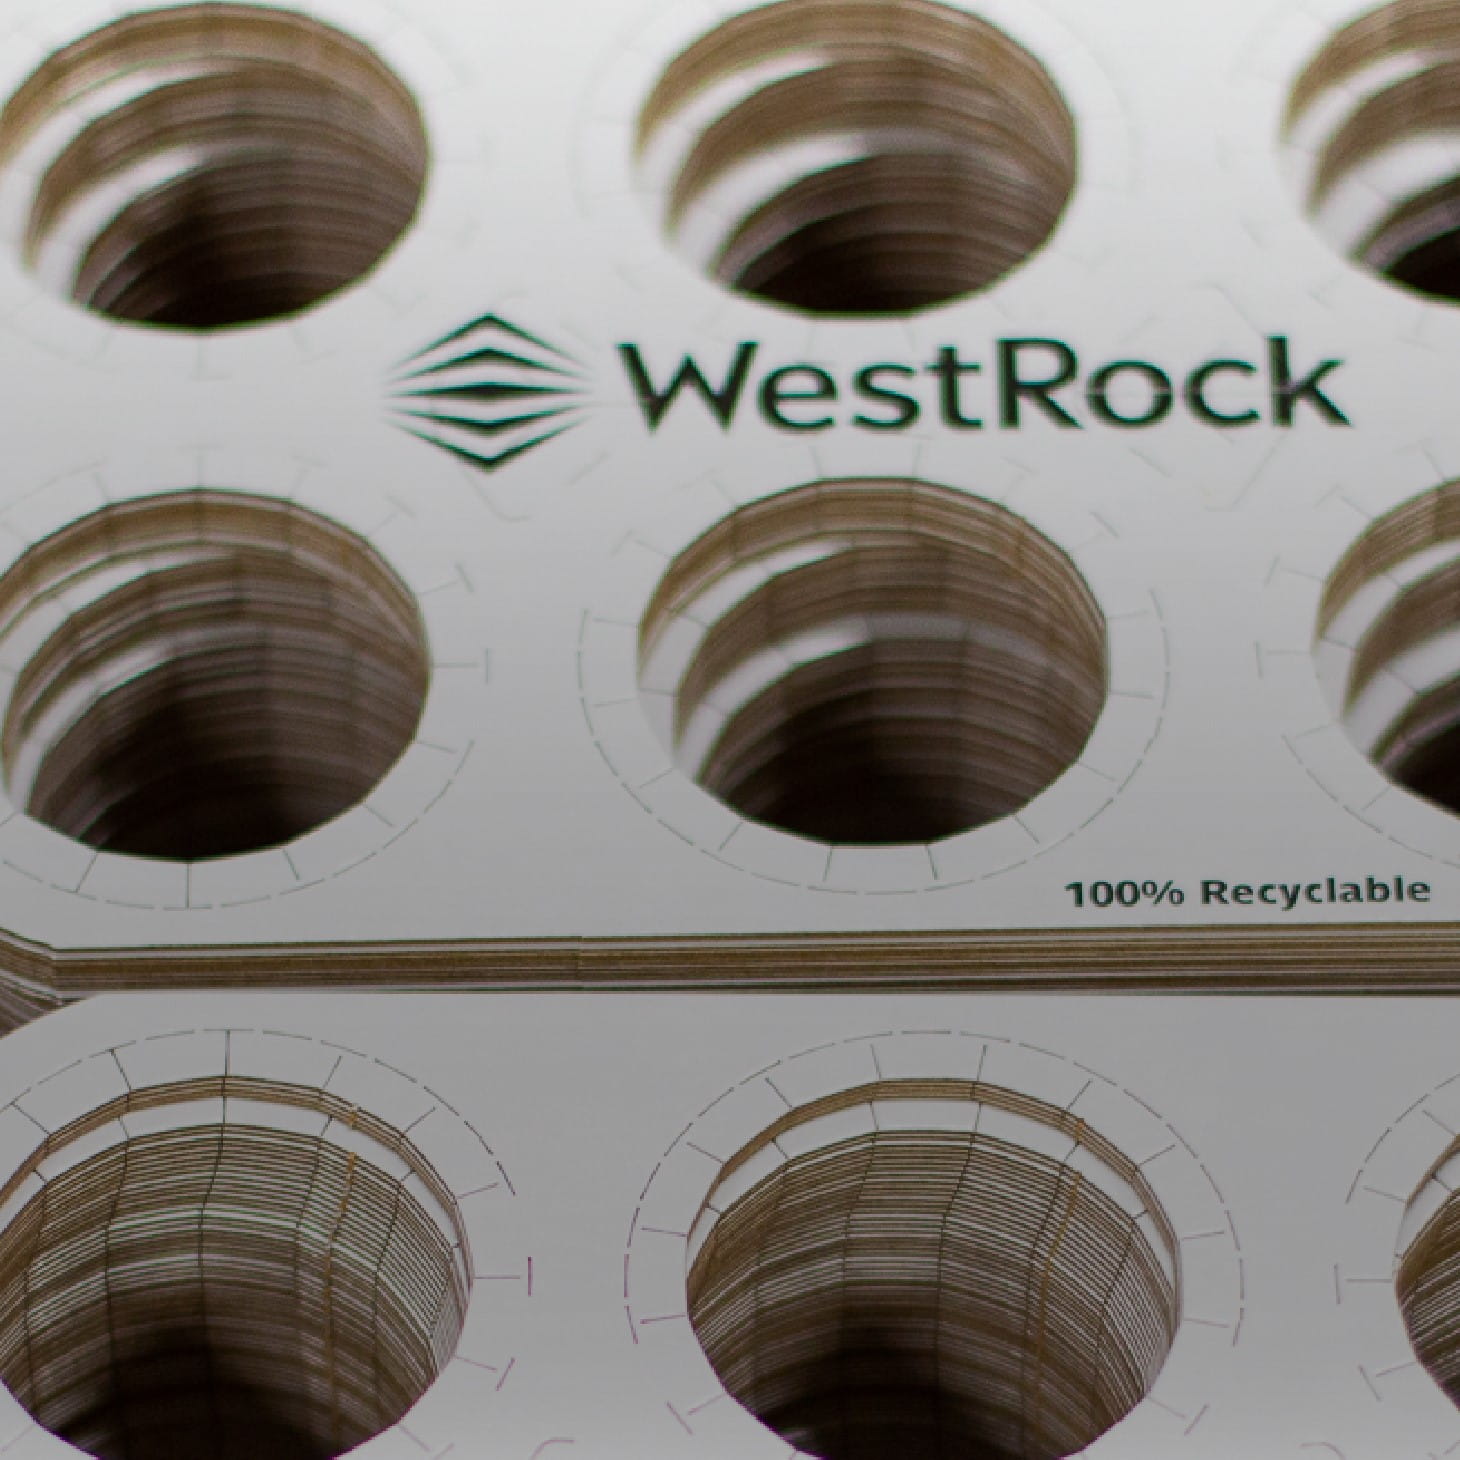 WestRock embalagem sustentável